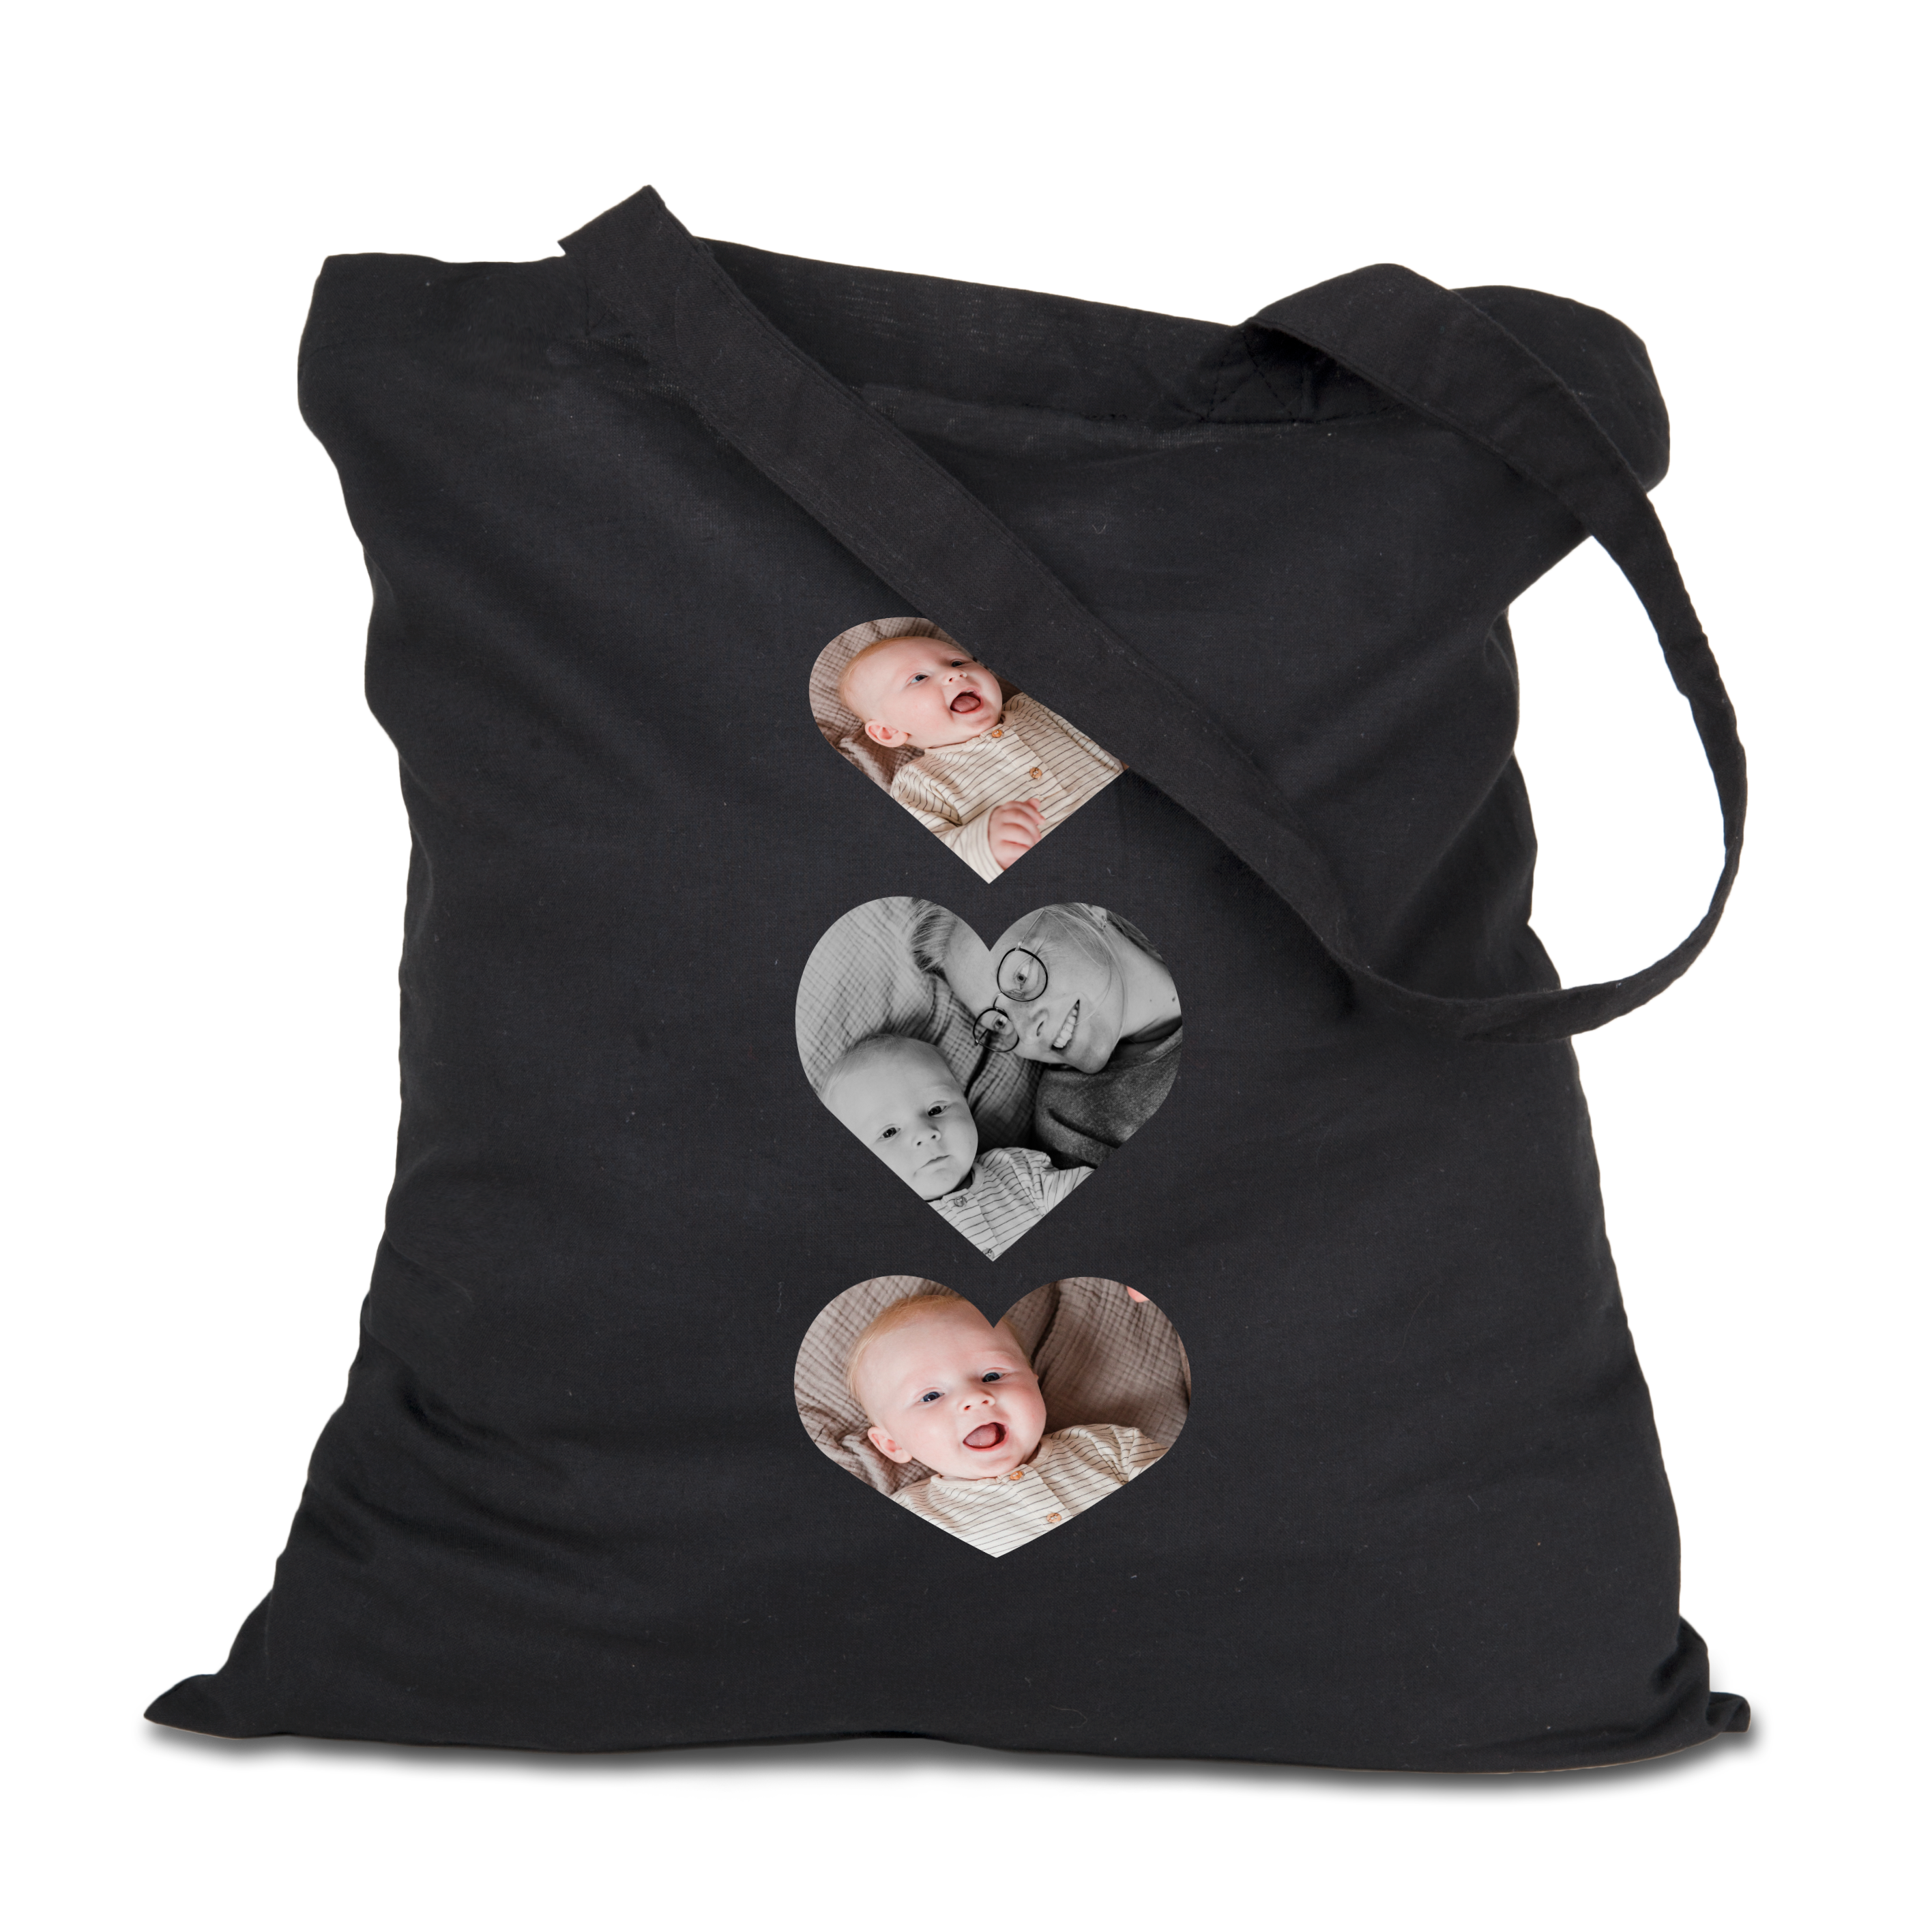 Personalised tote bag - Black